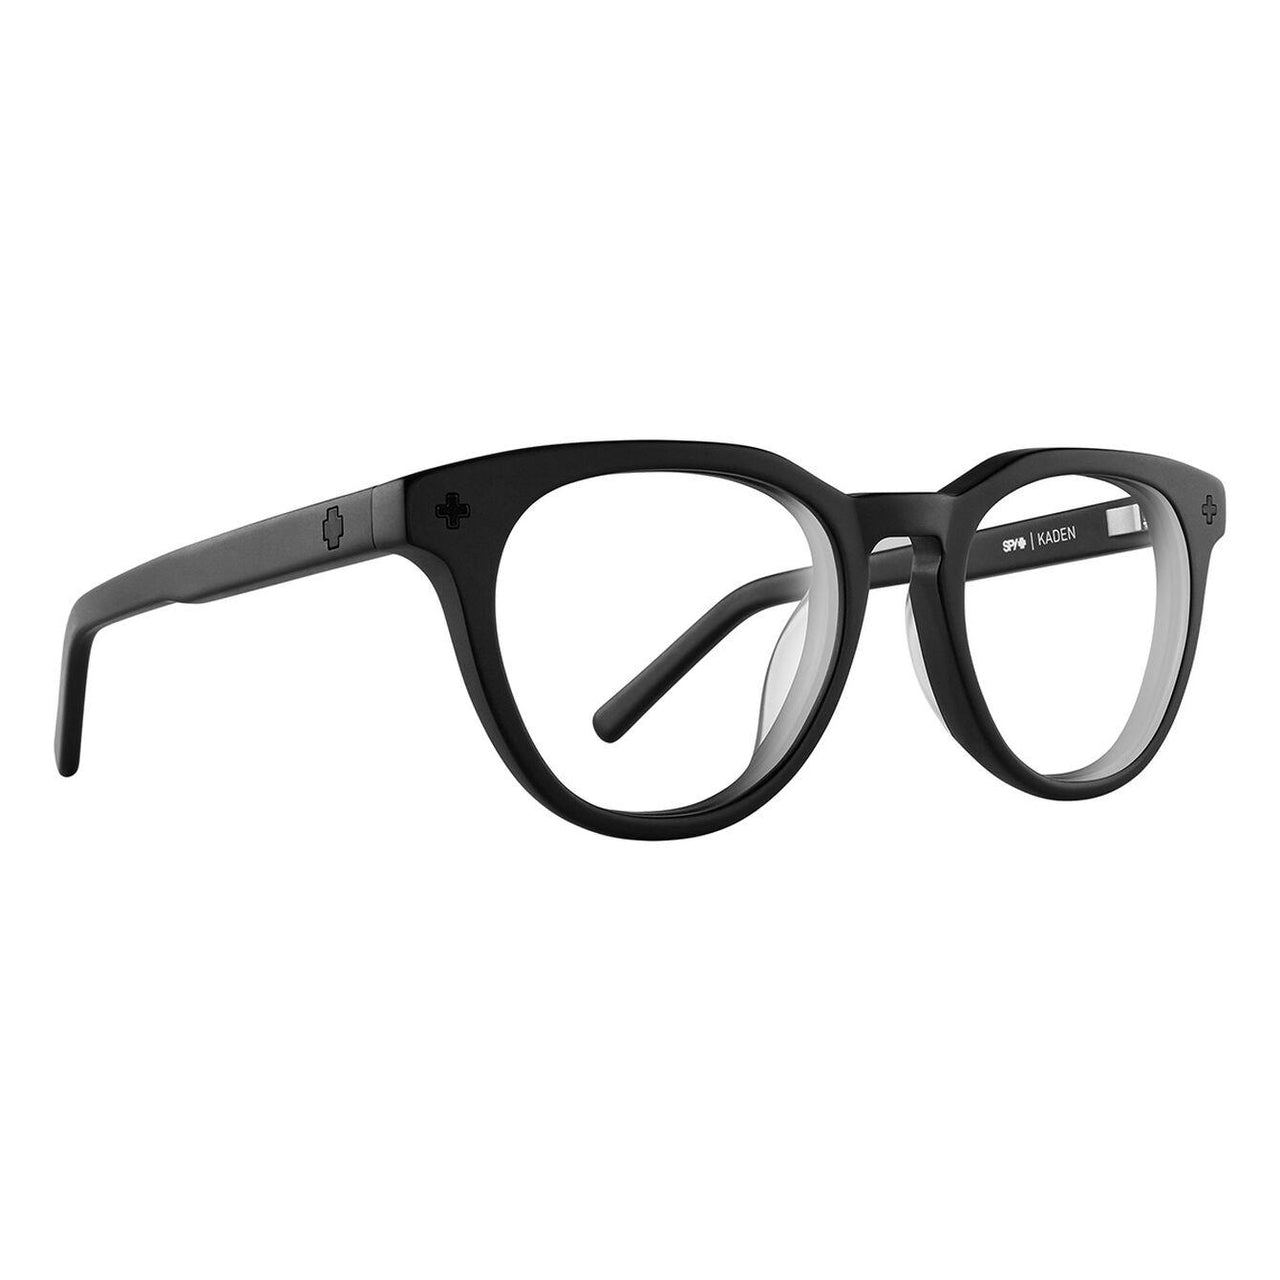 SpyOptic 570000 Eyeglasses